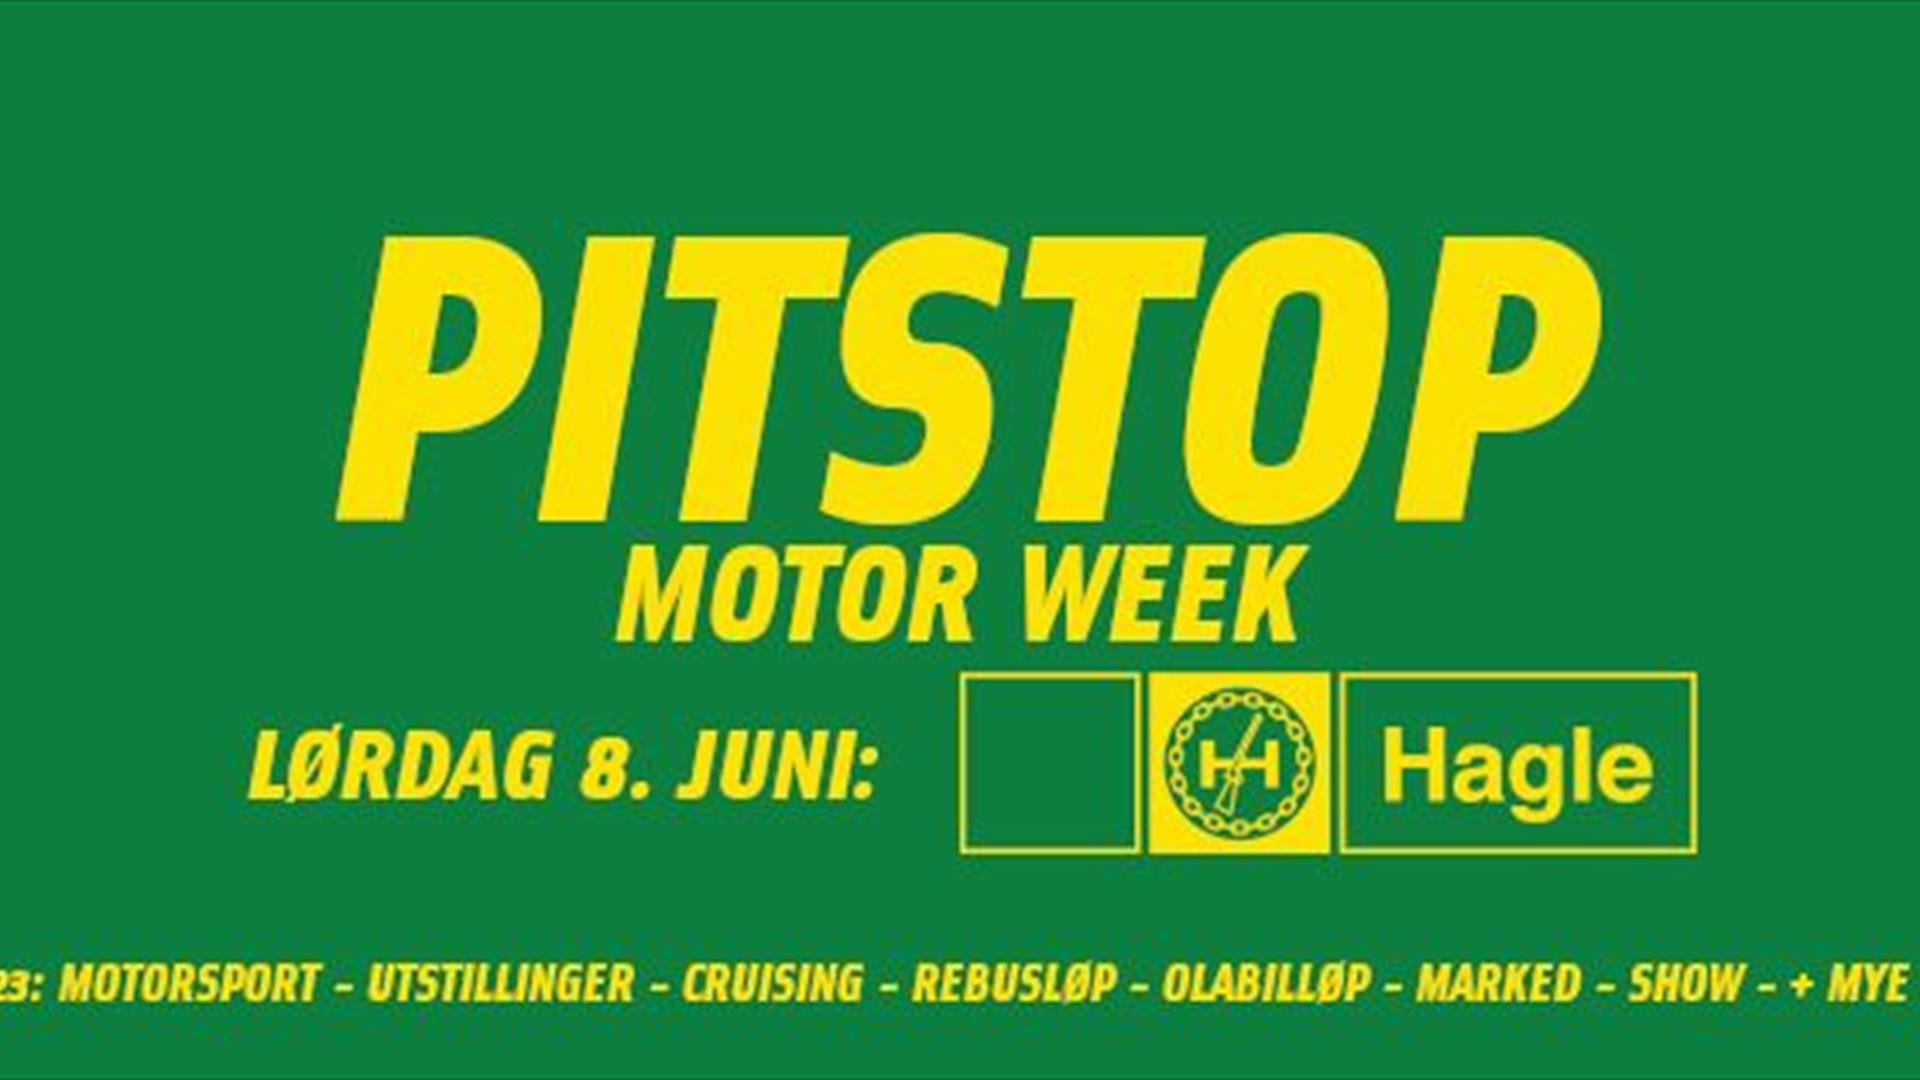 HAGLE - Pitstop Motor Week - Kongsvinger / U18